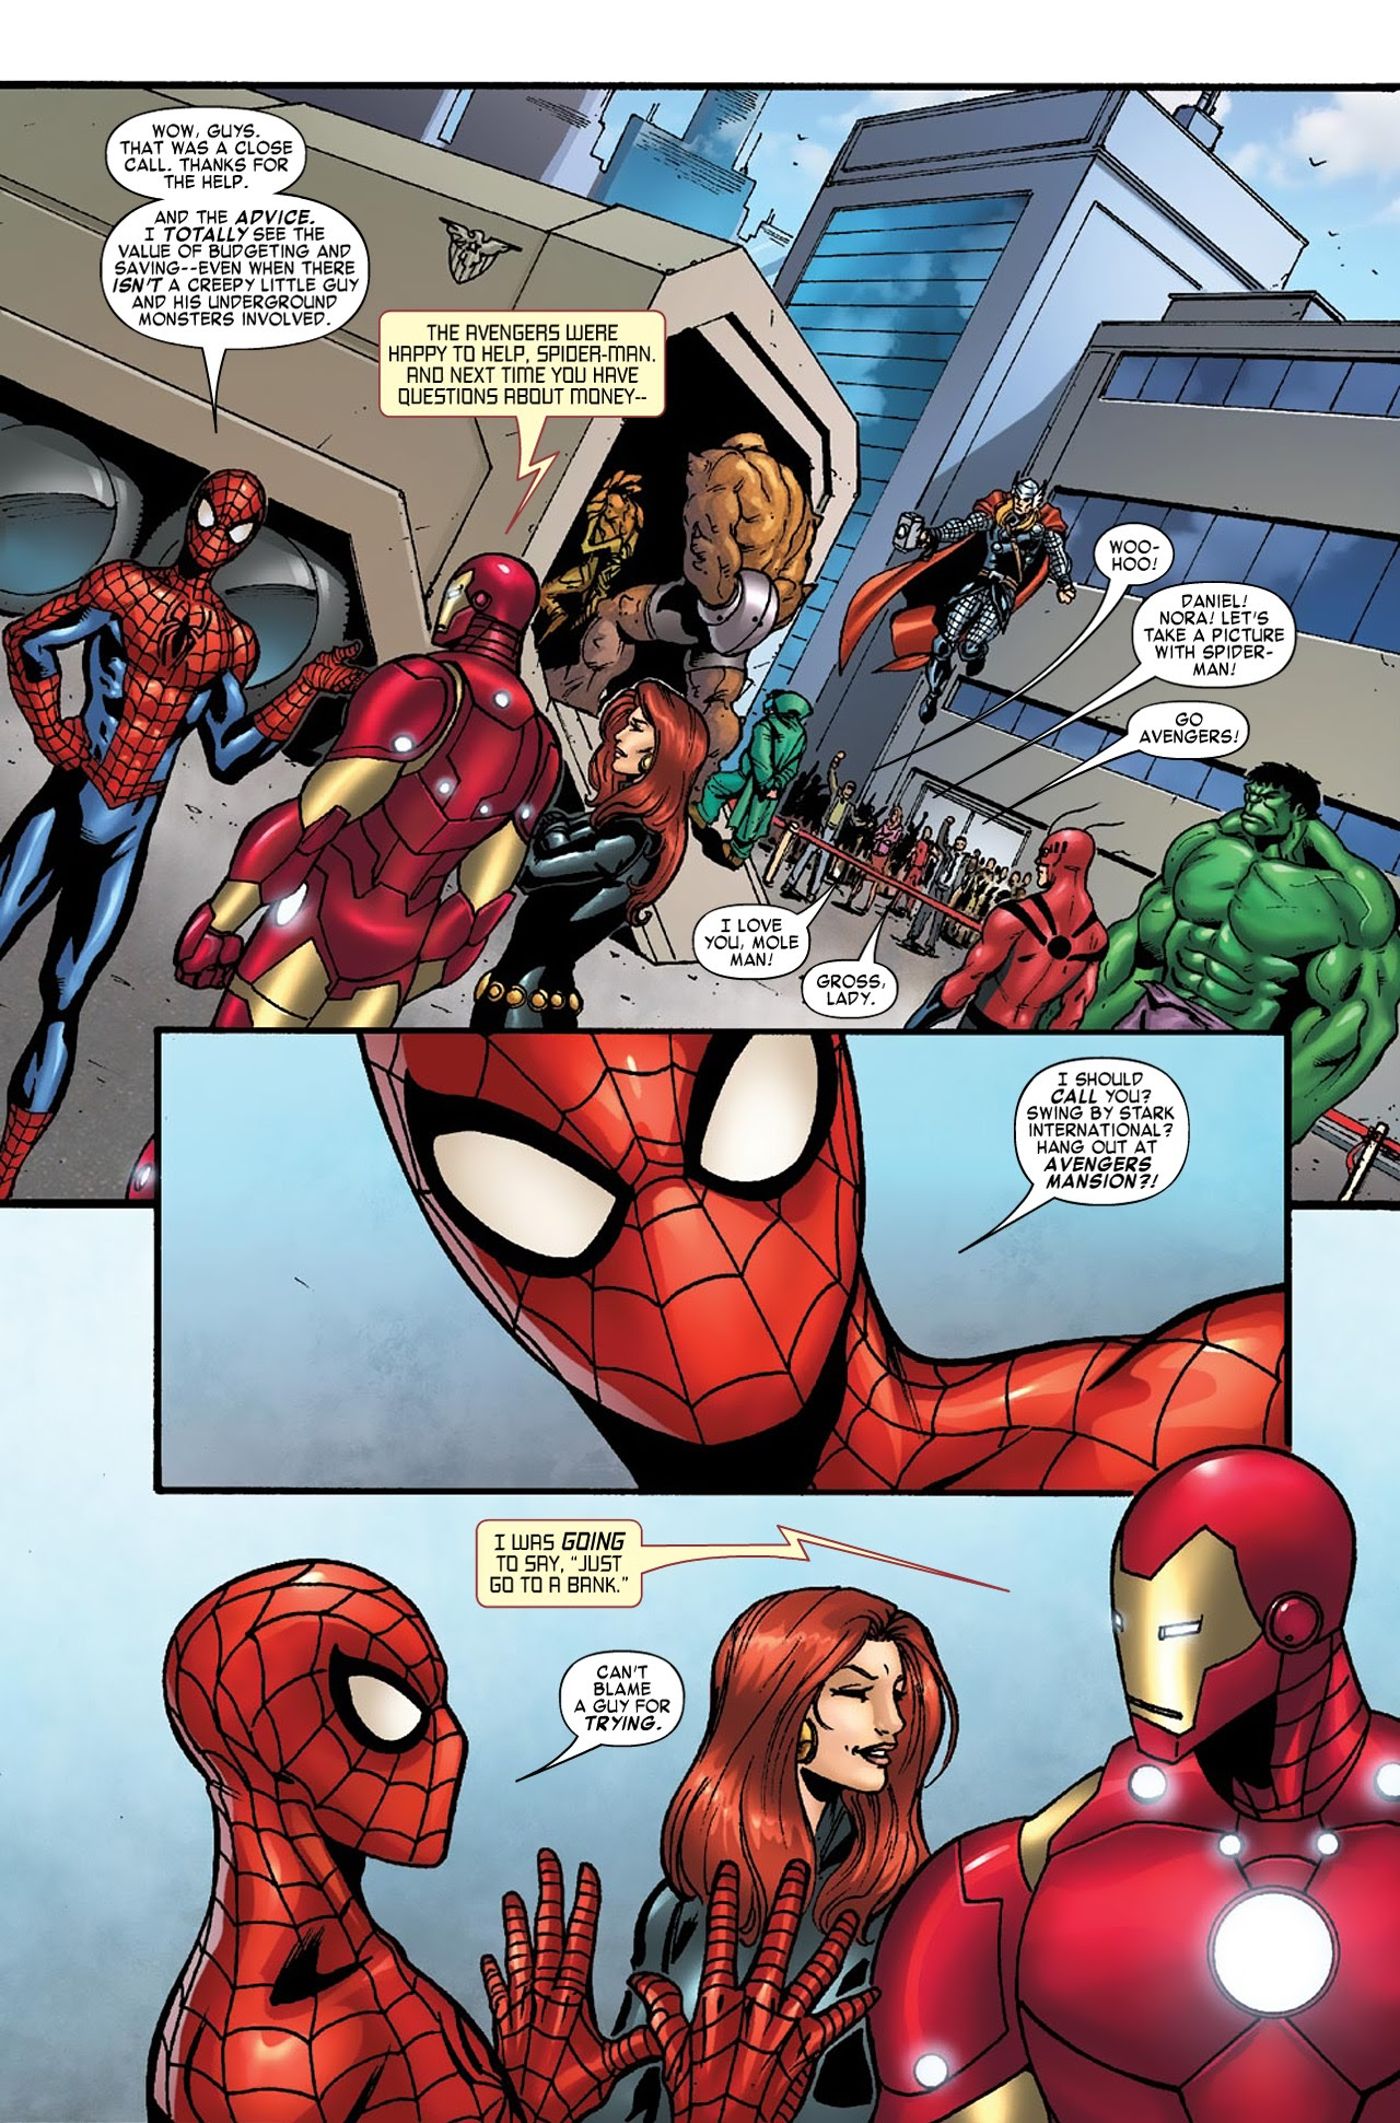 Spider-Man in the VISA comic